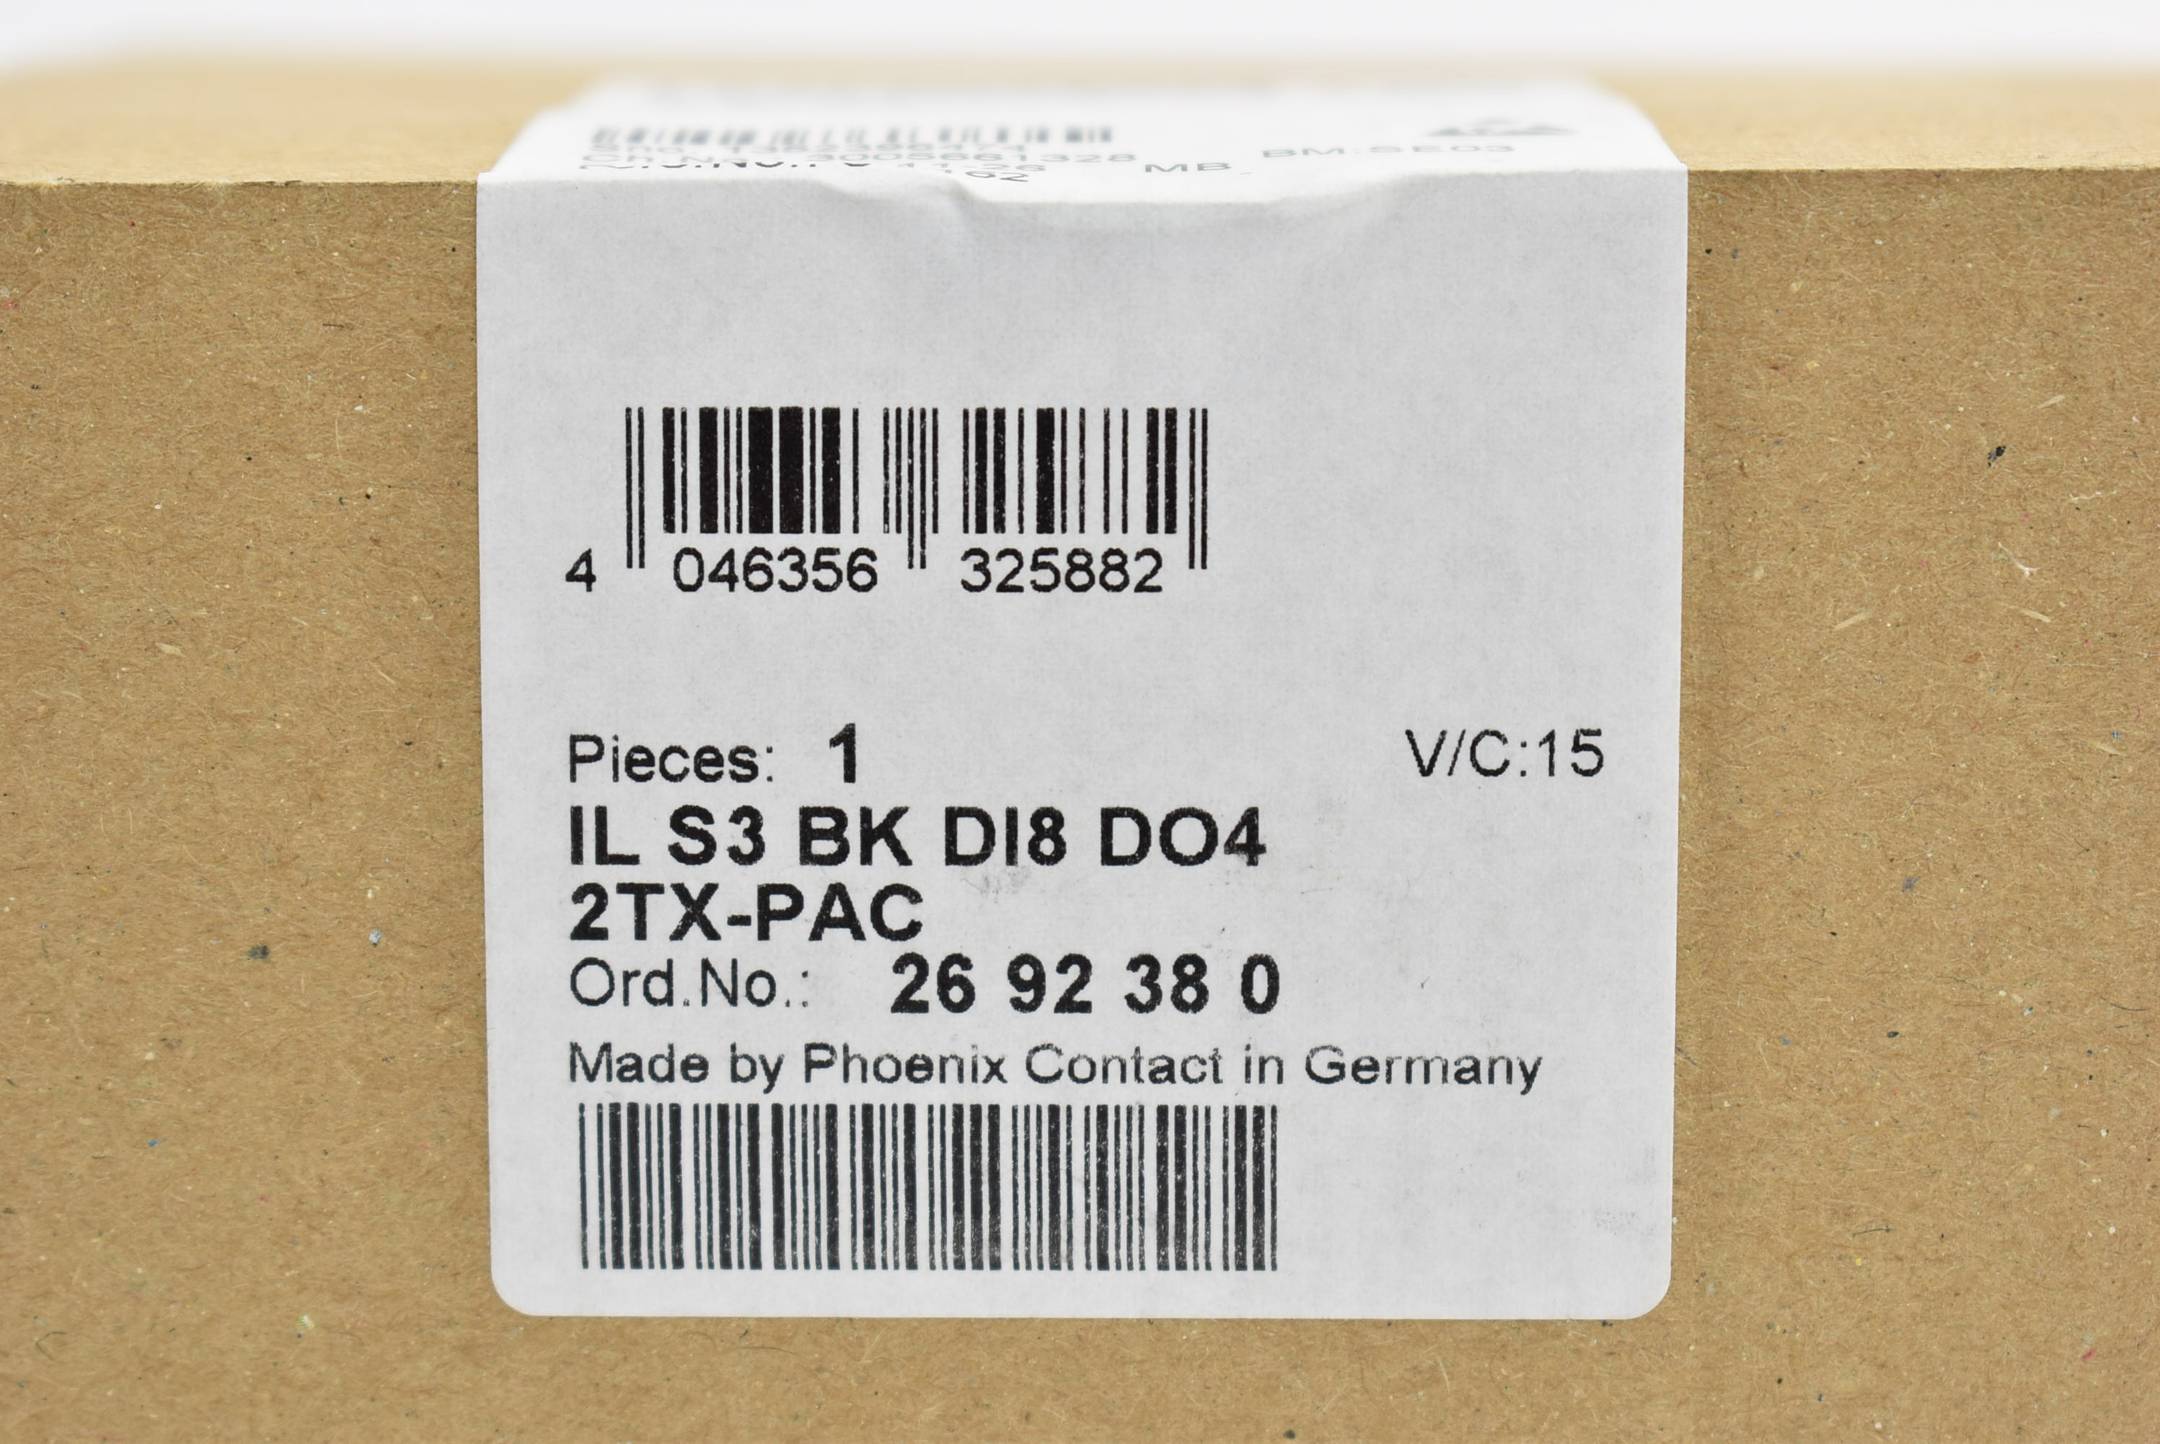 Phoenix Contact Buskoppler - IL S3 BK DI8 DO4 2TX-PAC ( 2692380 )